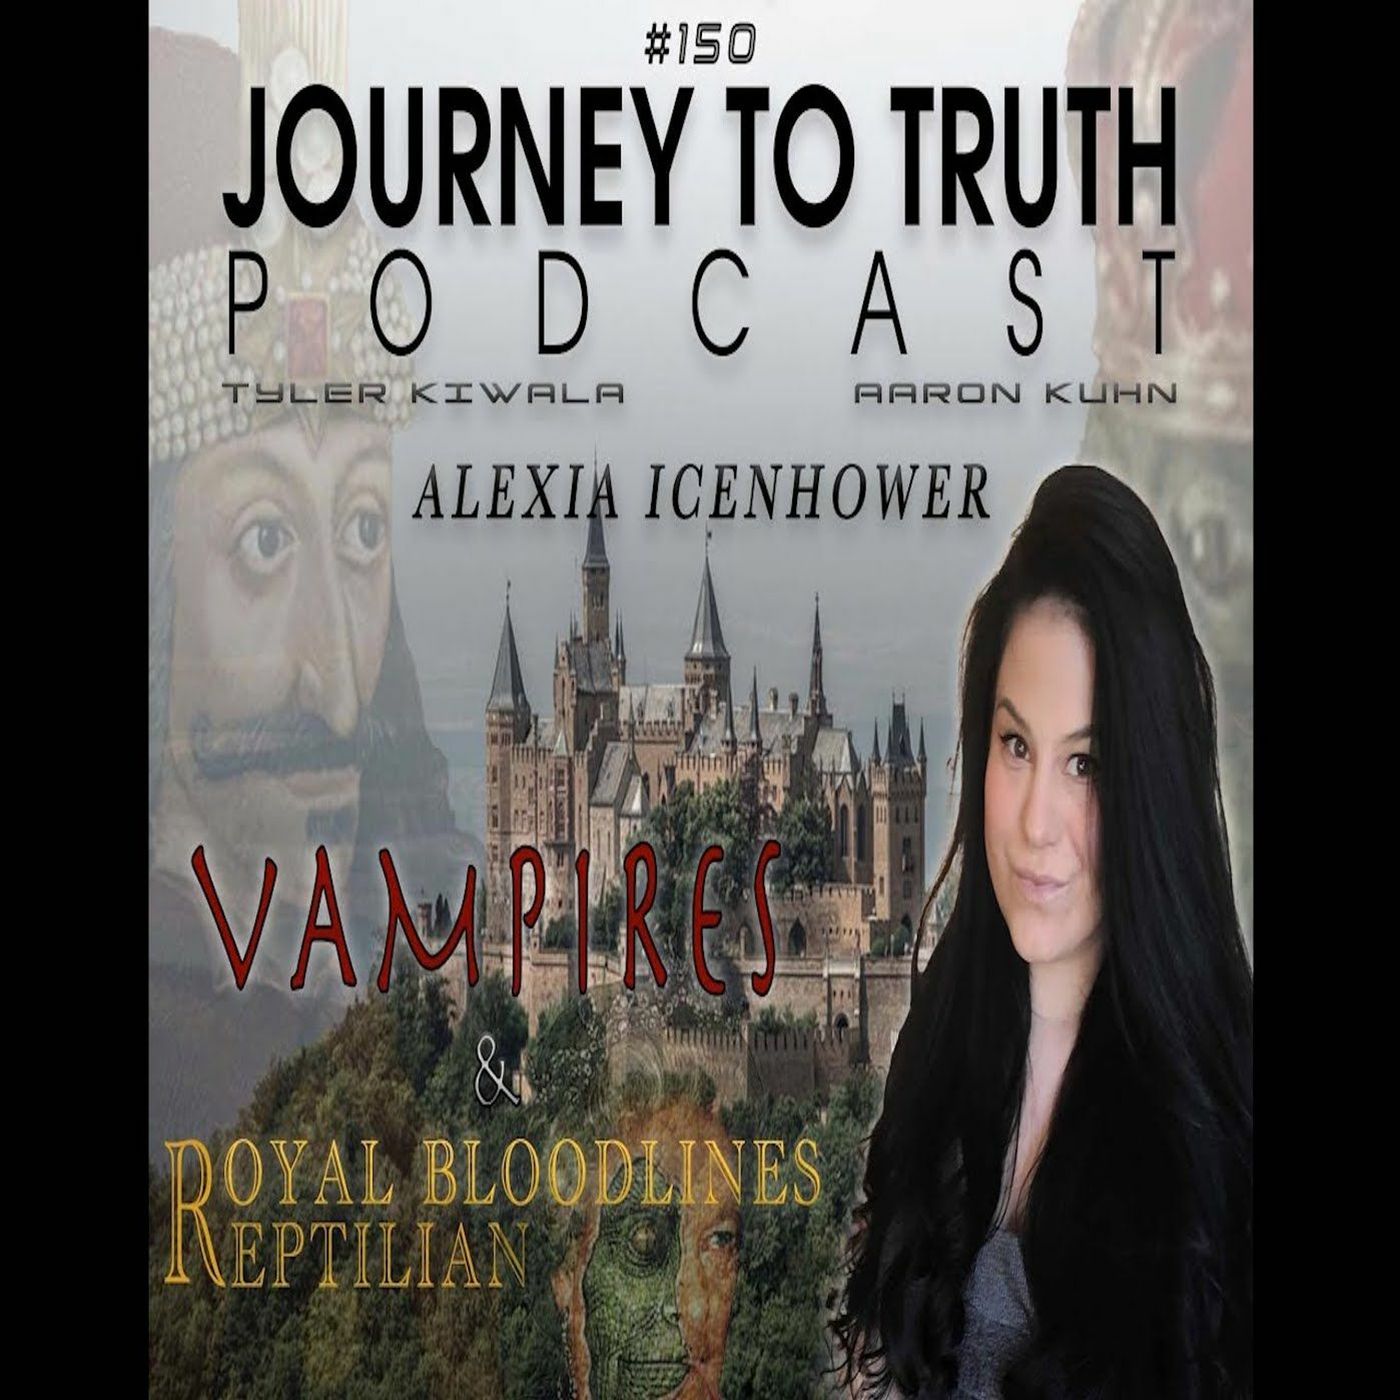 EP 150 - Alexia Icenhower - Vampires - Reptilians & Royal Bloodlines